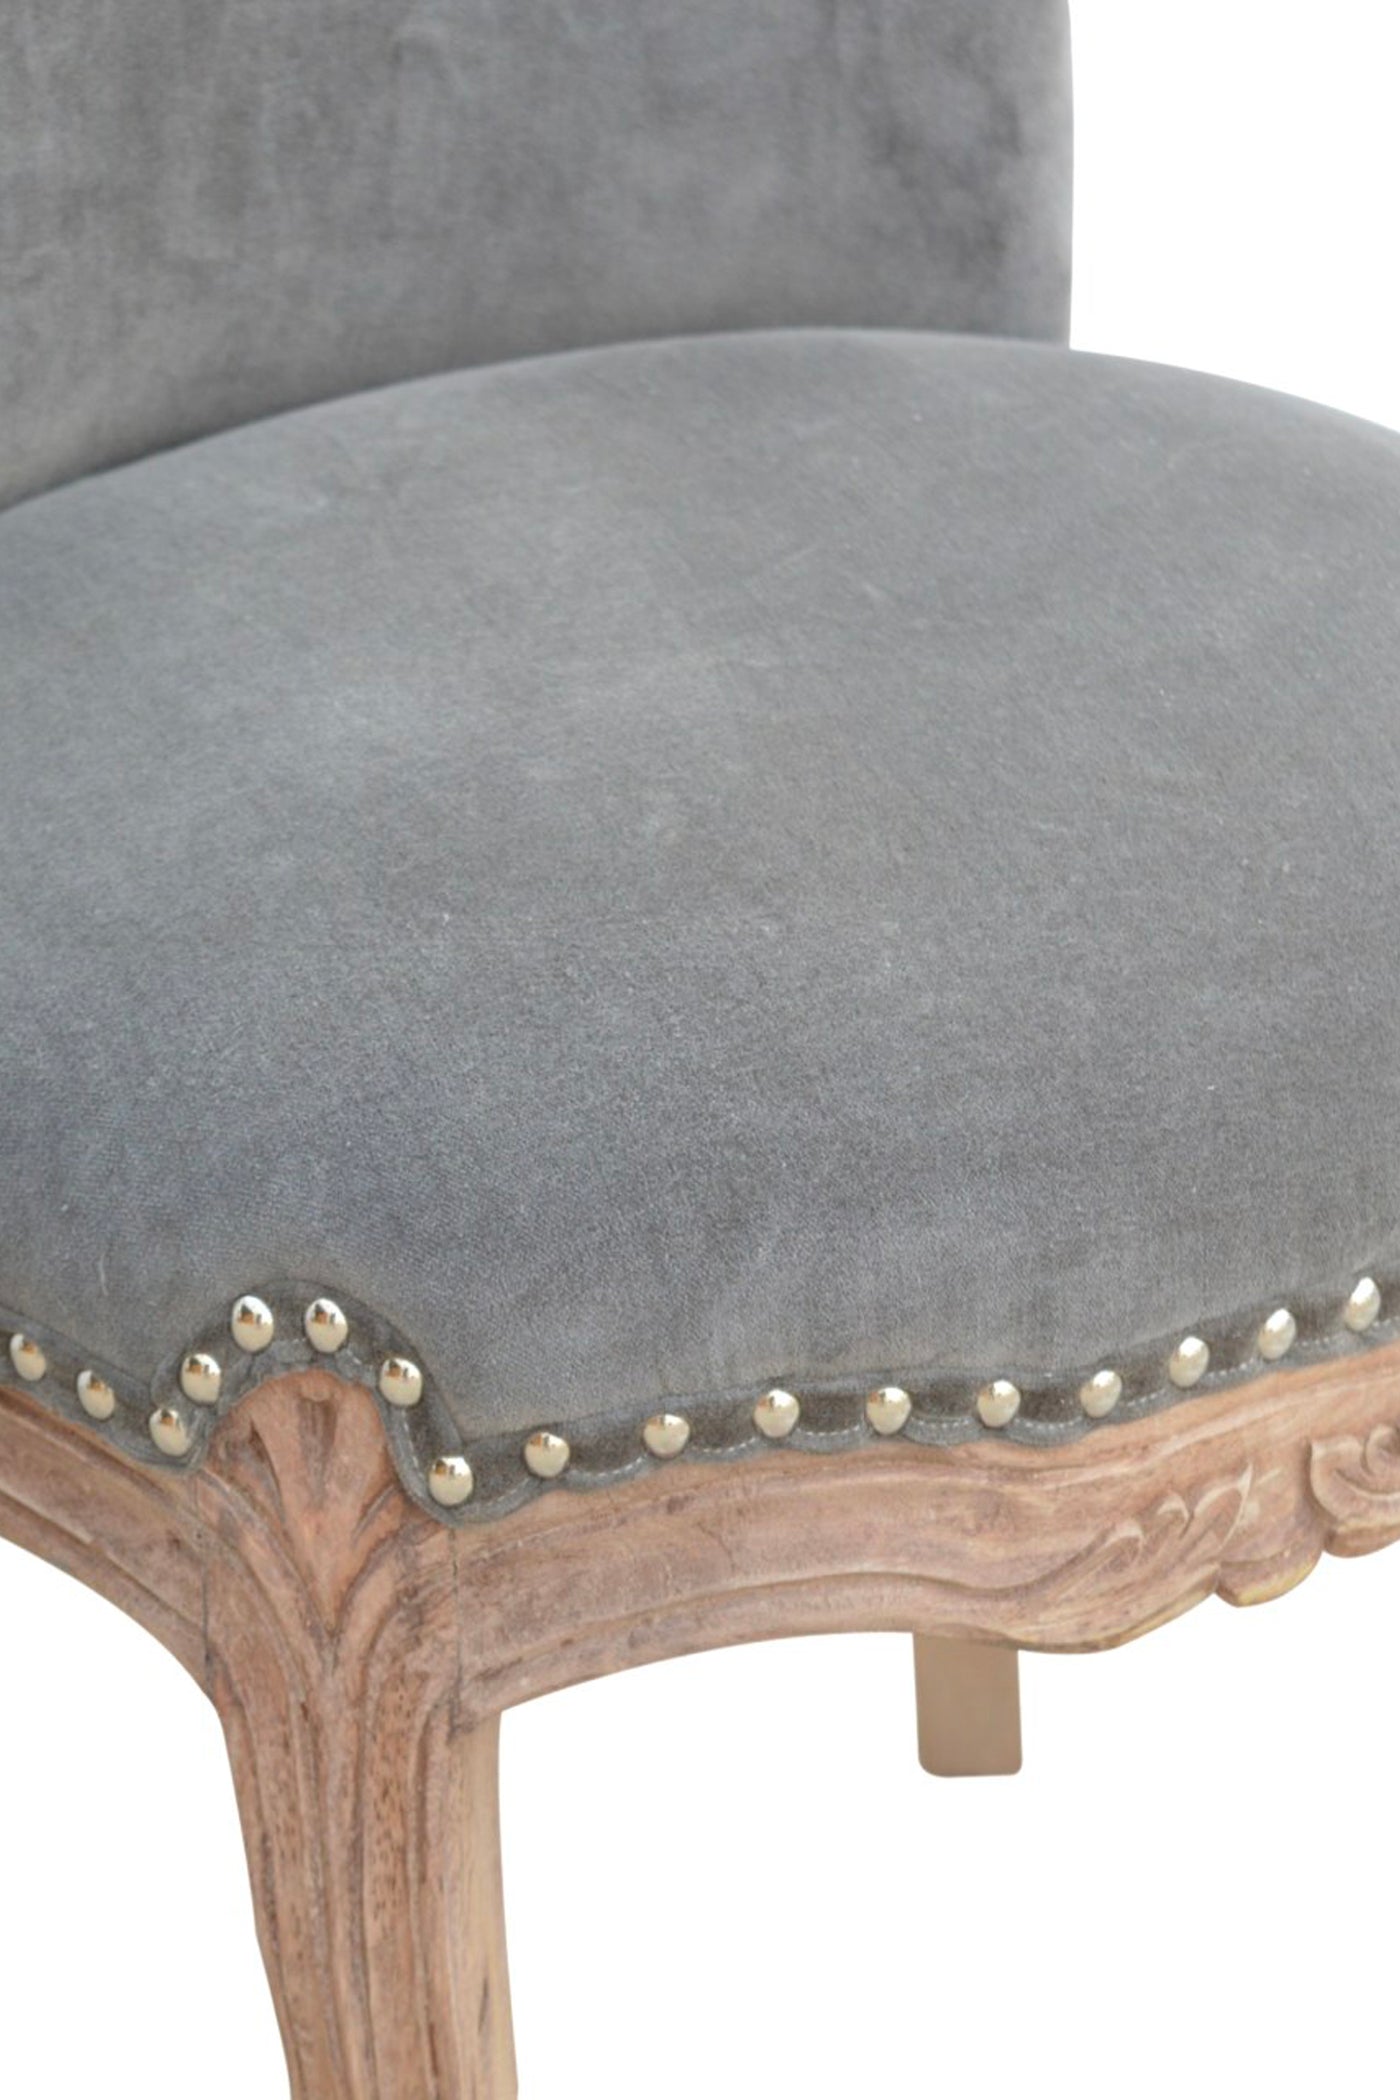 Versailles - Chair Studded Grey